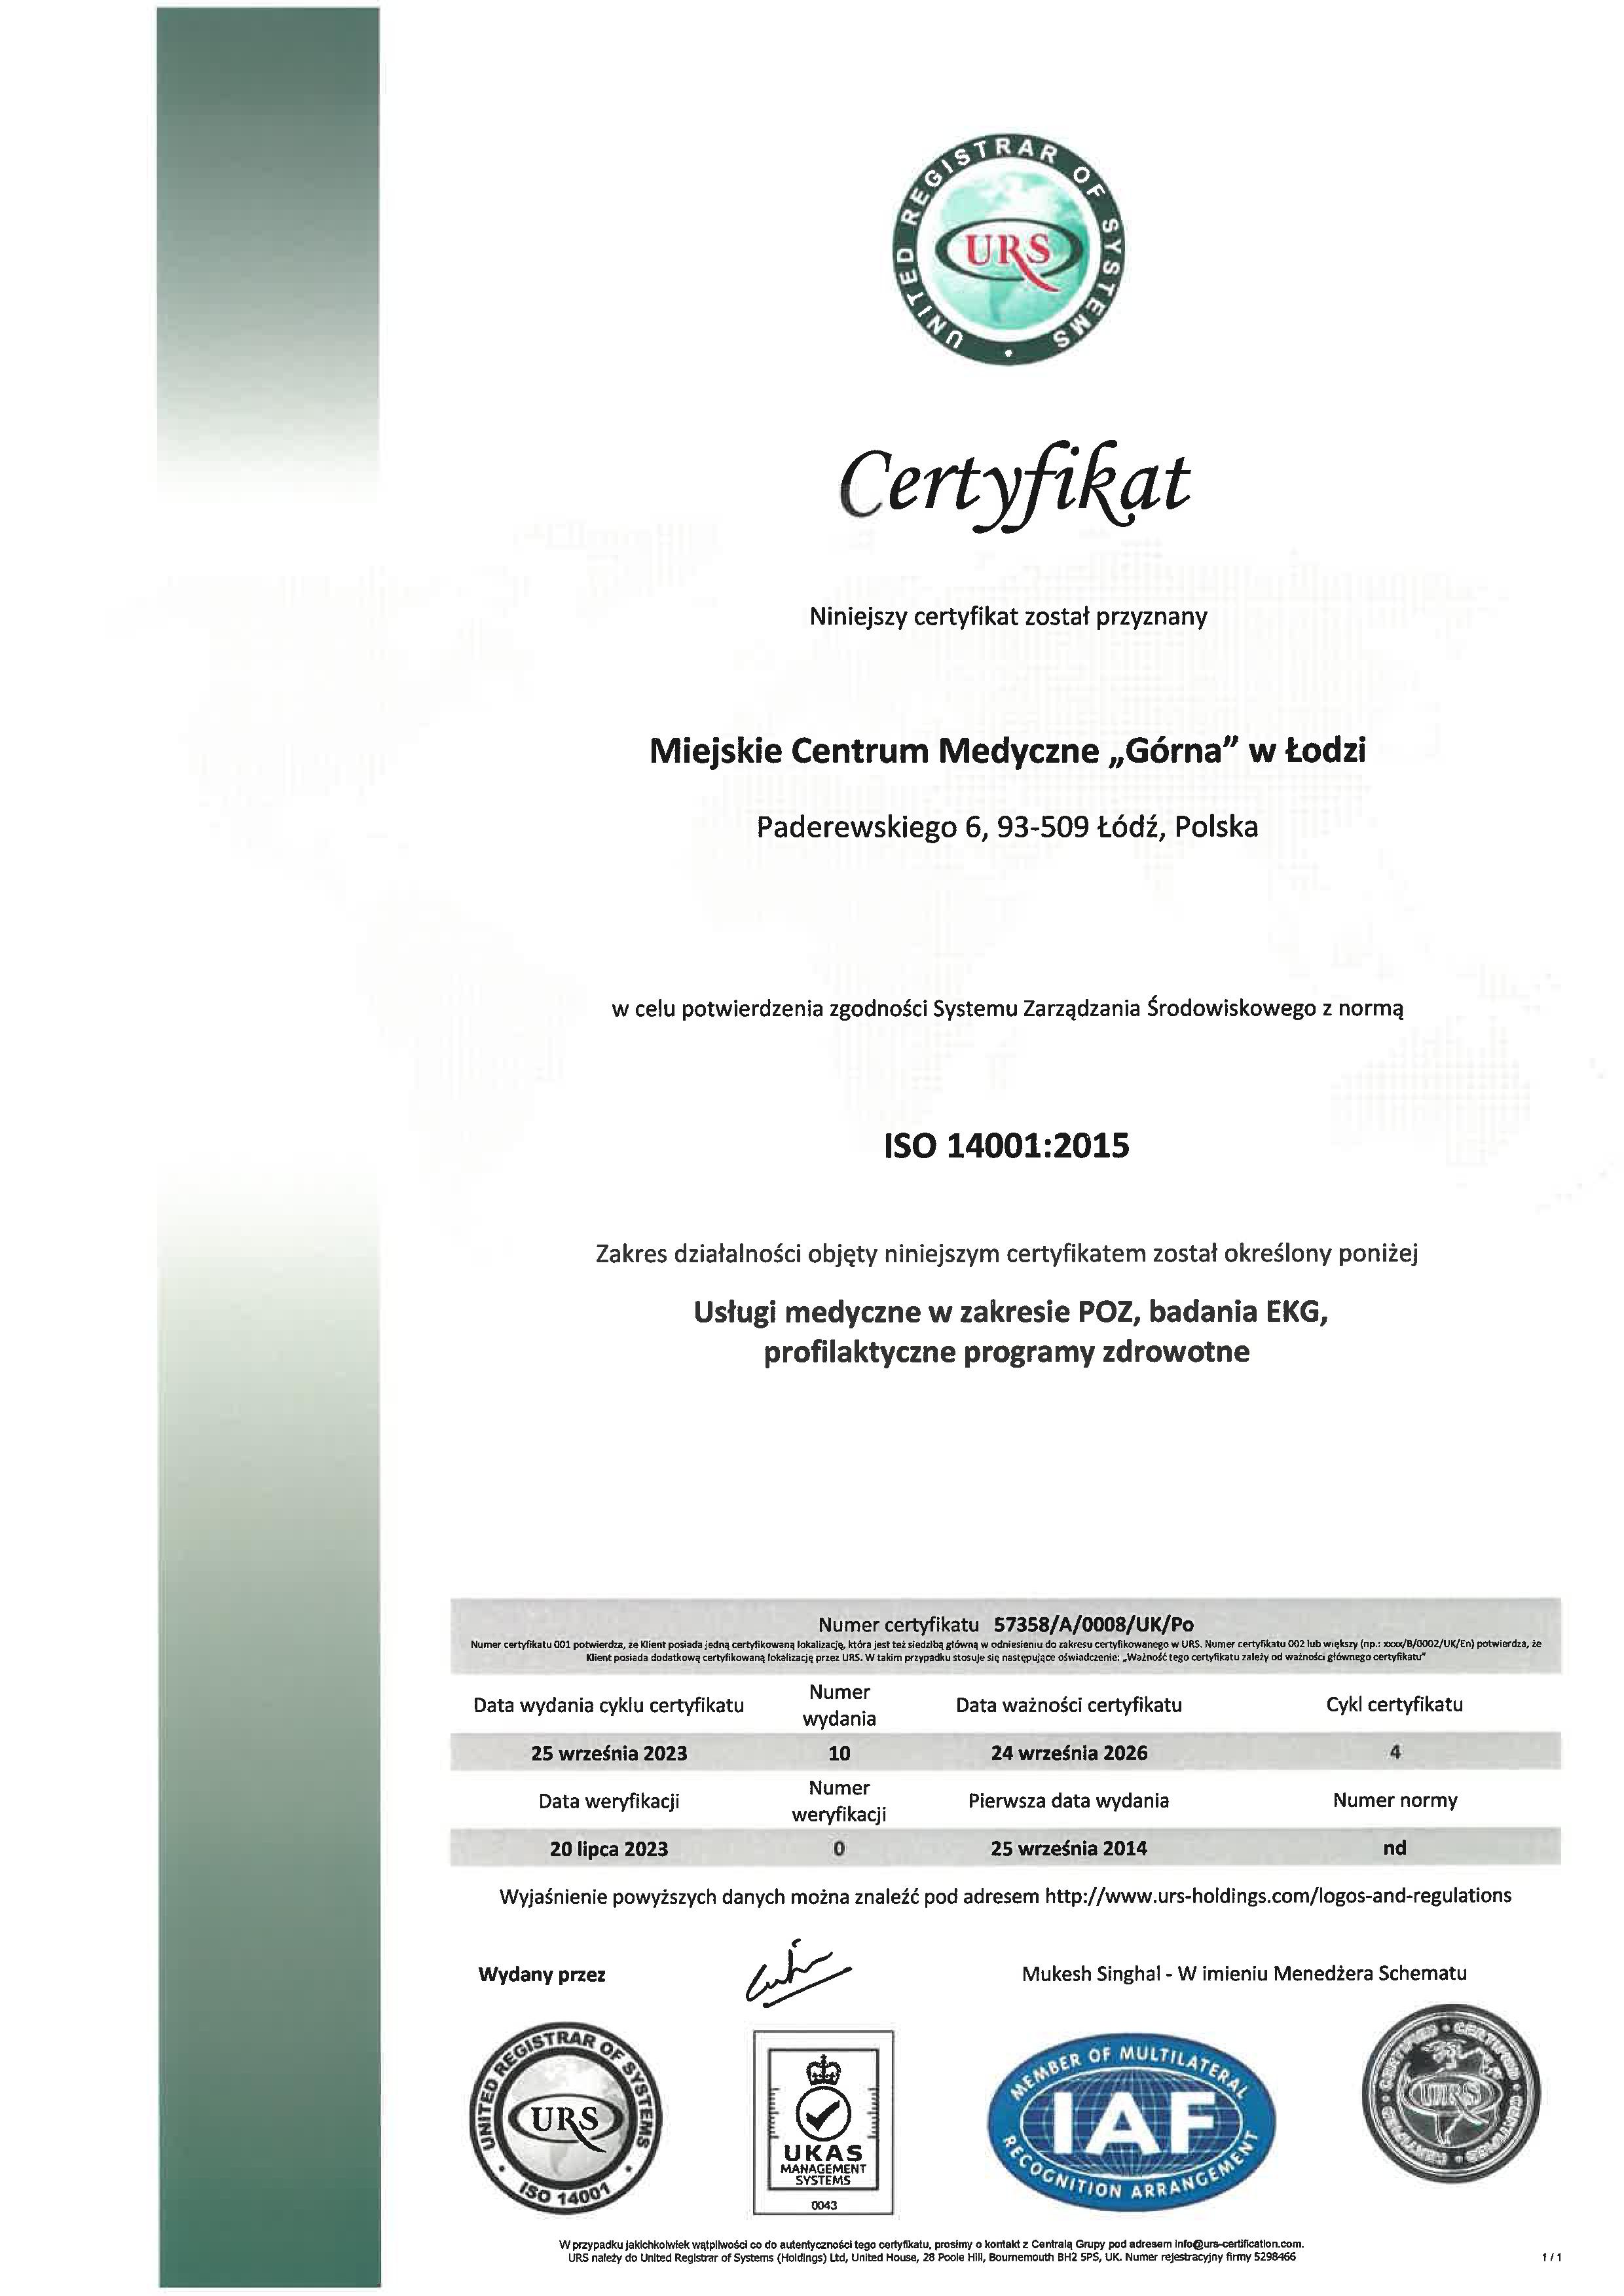 ISO 14001 Paderewskiego